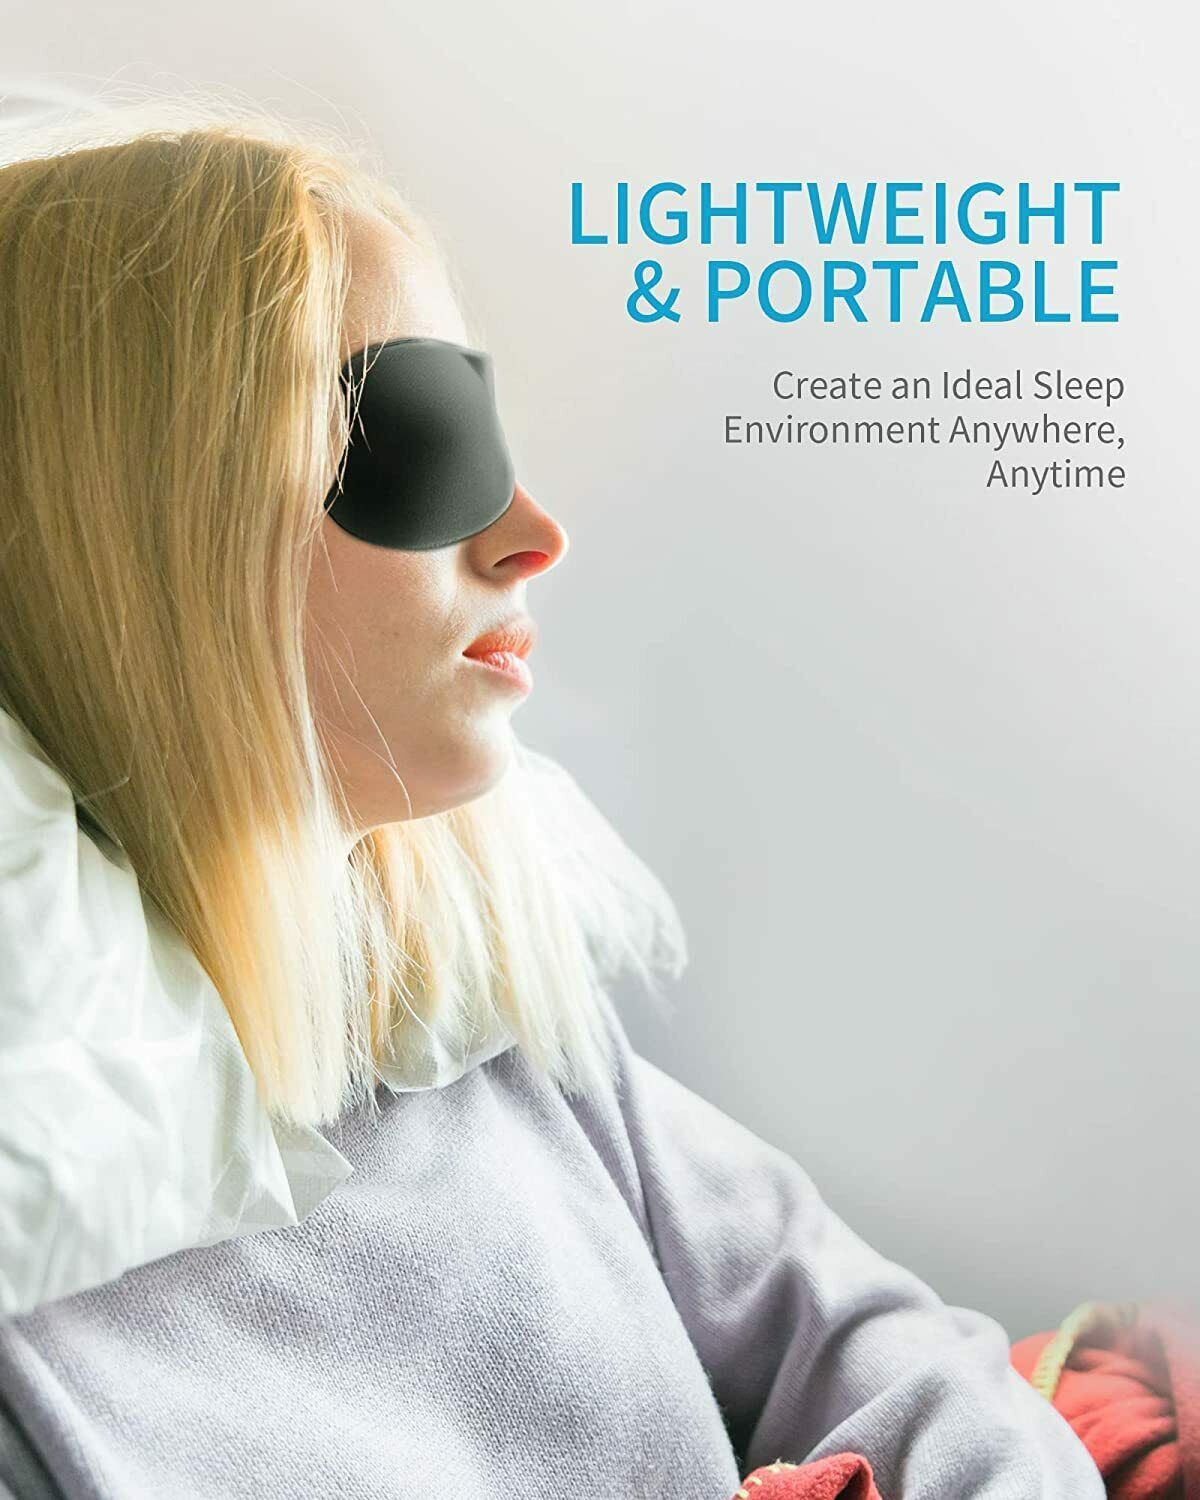  Eye Mask for Sleeping, 2 Pack 3D Contoured Sleep Eye